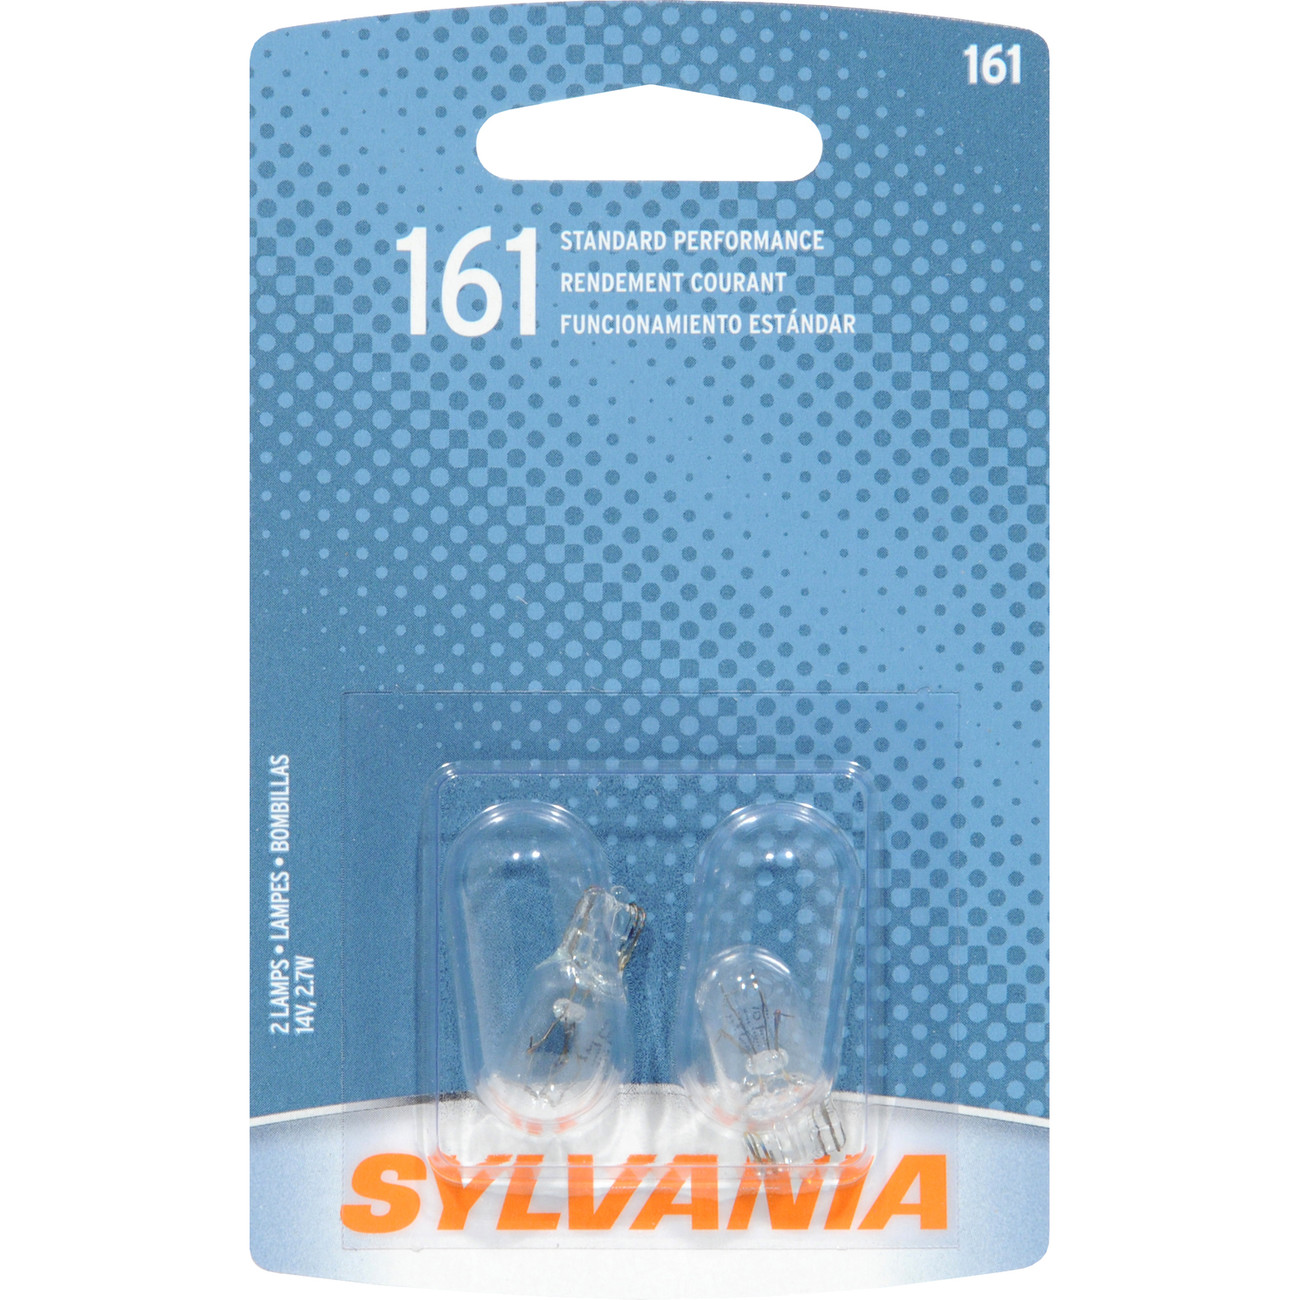 SYLVANIA RETAIL PACKS - Blister Pack Twin Ash Tray Light Bulb - SYR 161.BP2